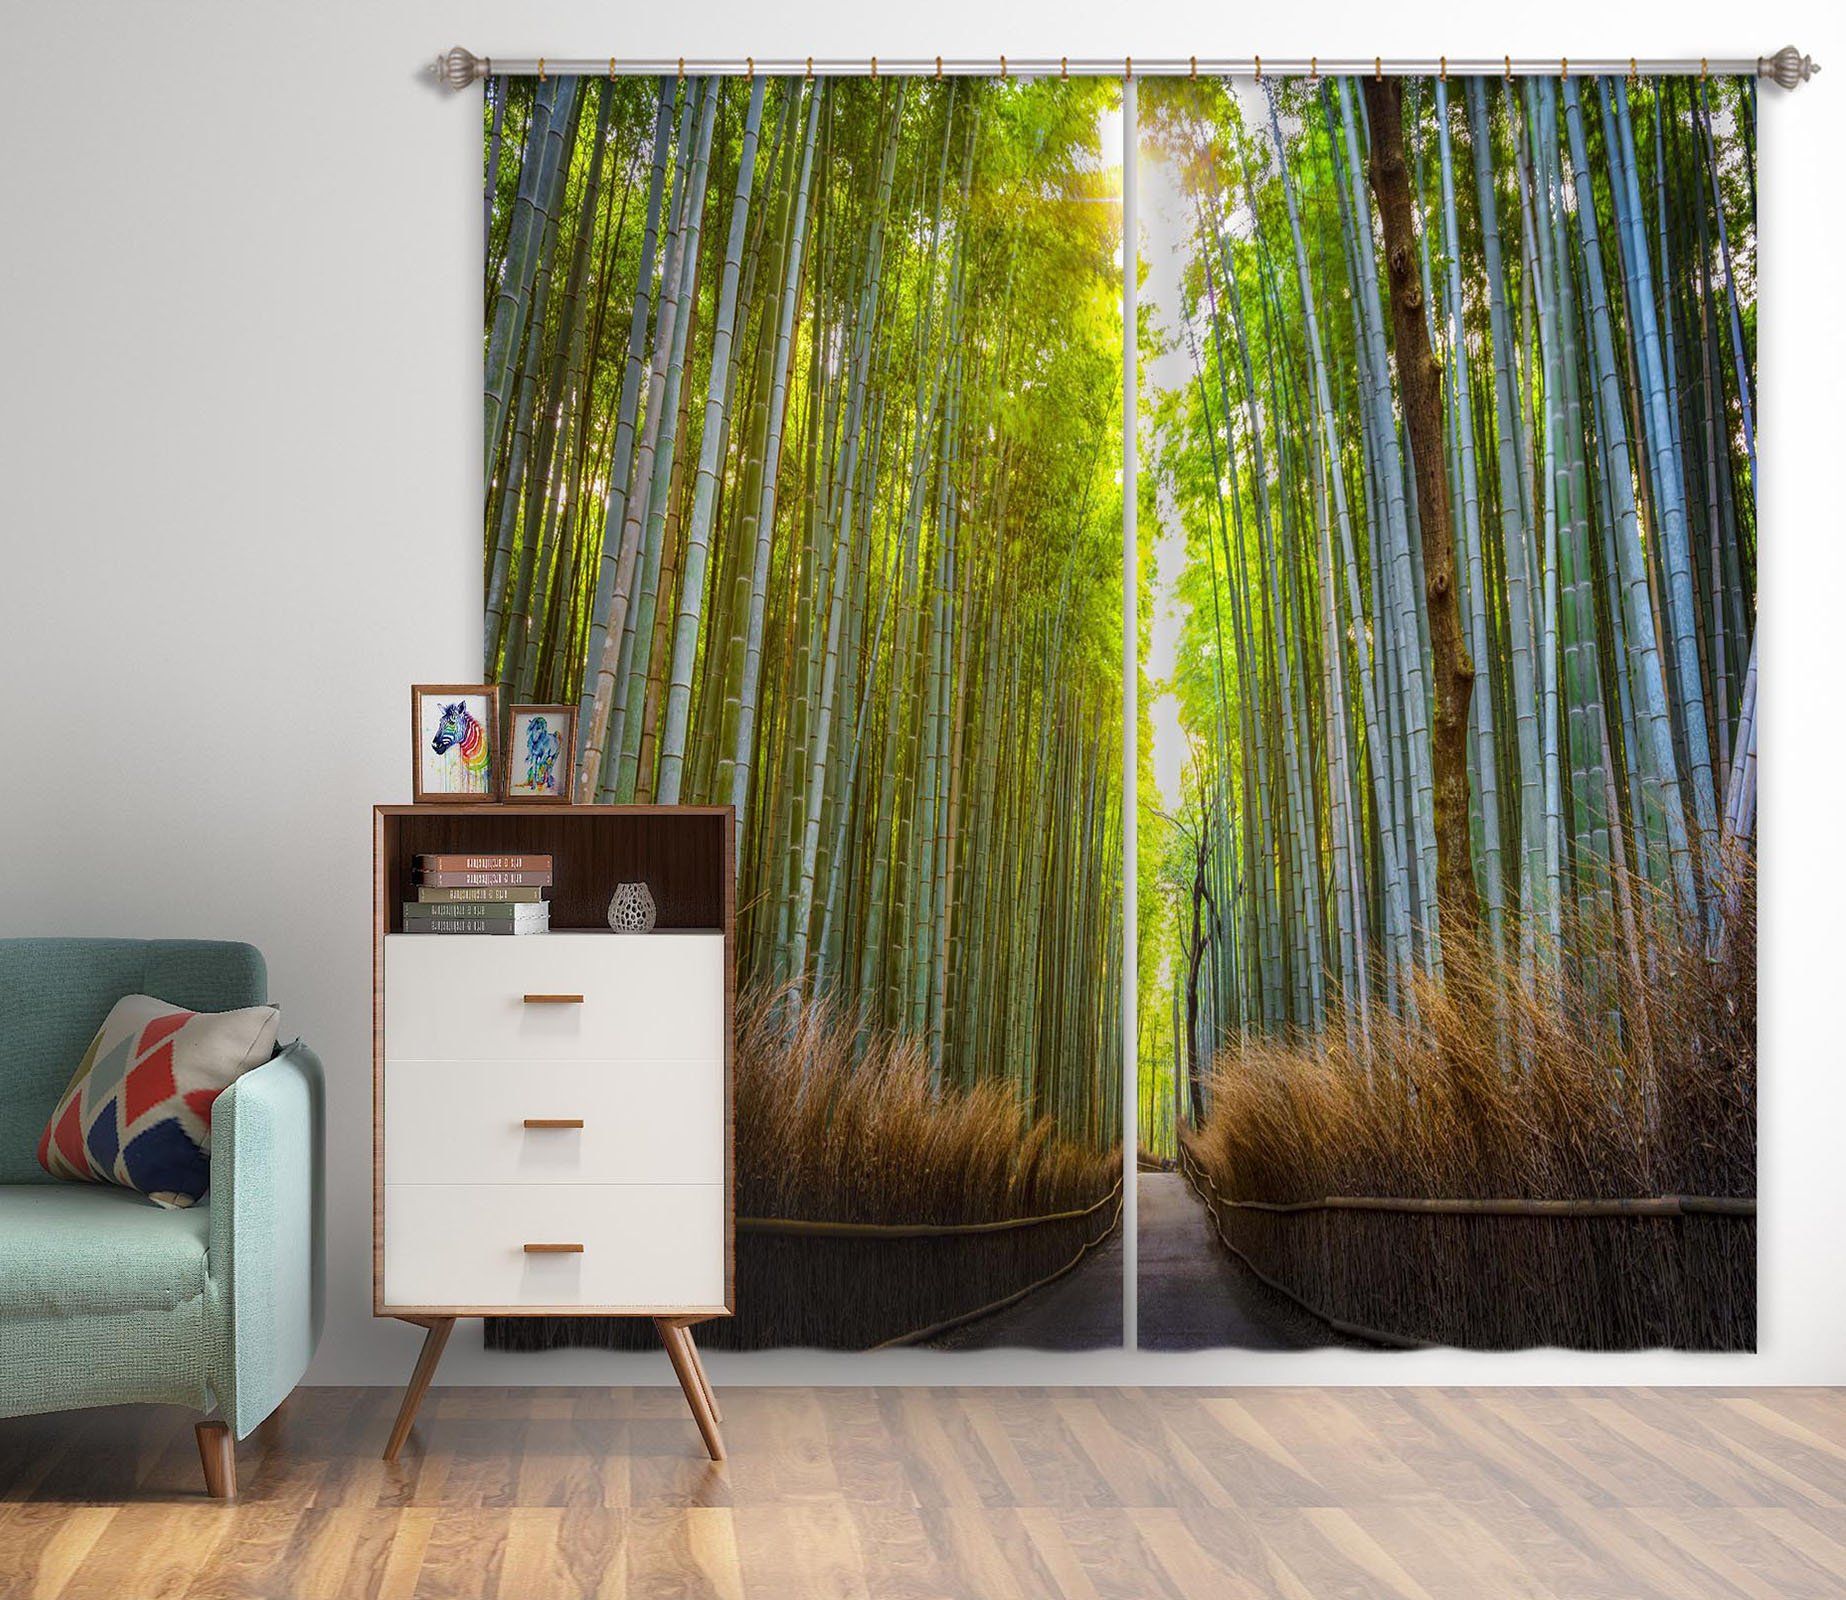 3D Bamboo Forest 079 Marco Carmassi Curtain Curtains Drapes Curtains AJ Creativity Home 